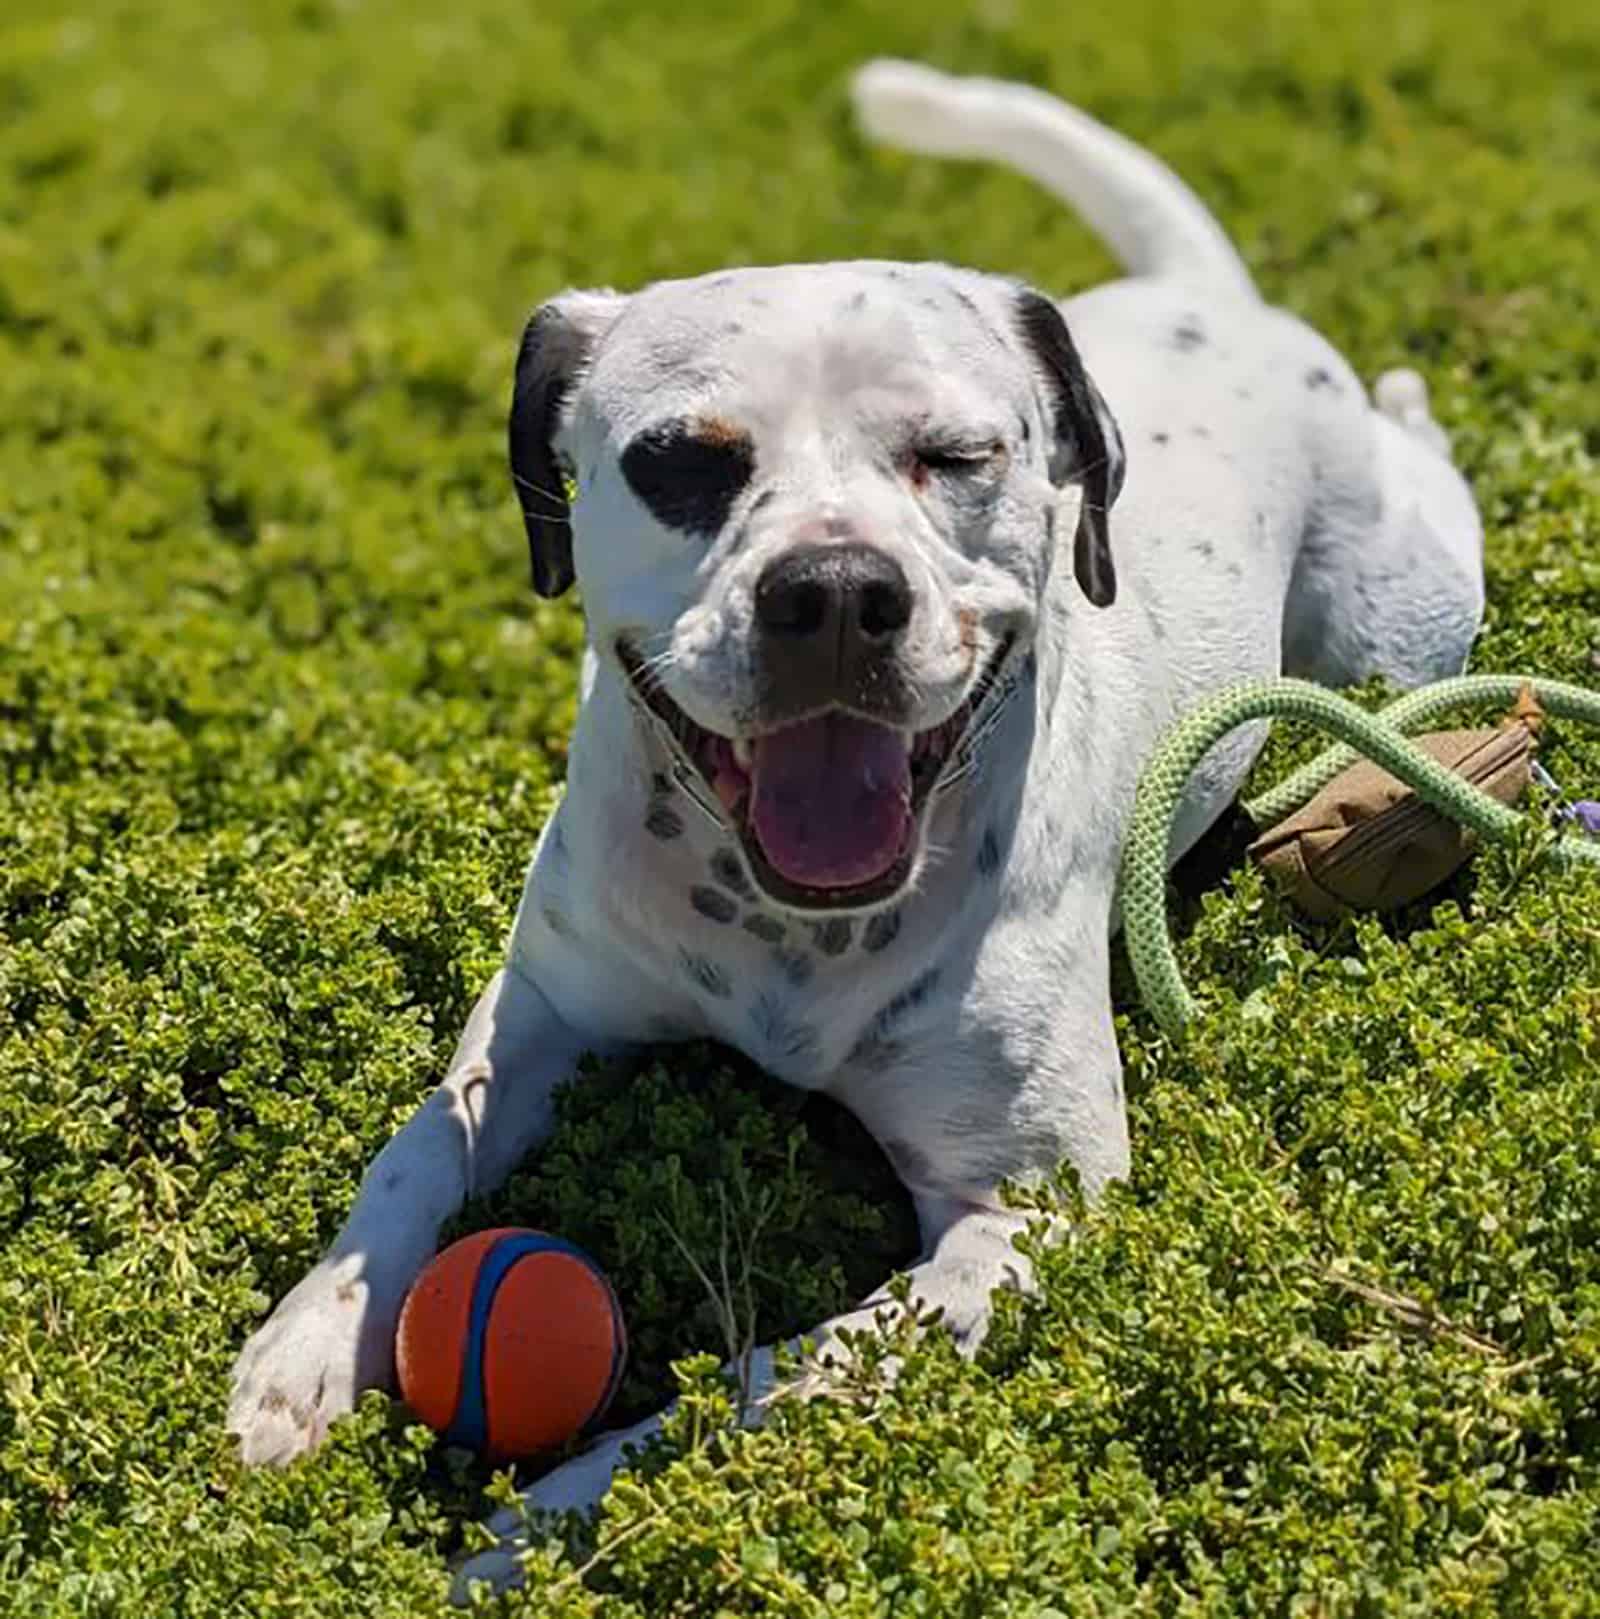 dalmatian and pitbull mix dog playing with a ball